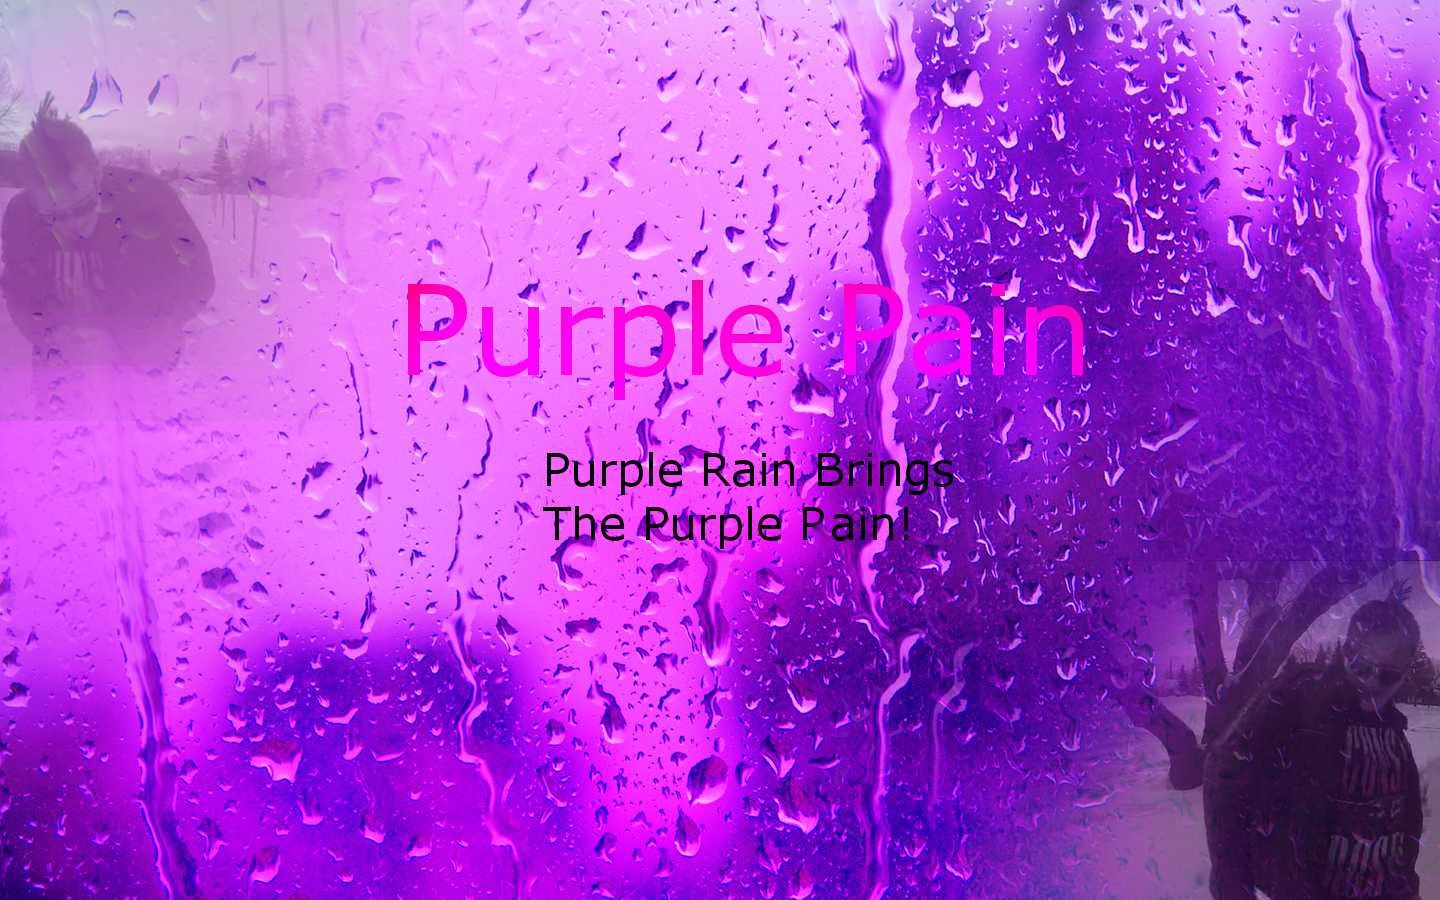 Candle it [Purple Rain Rap] - YouTube